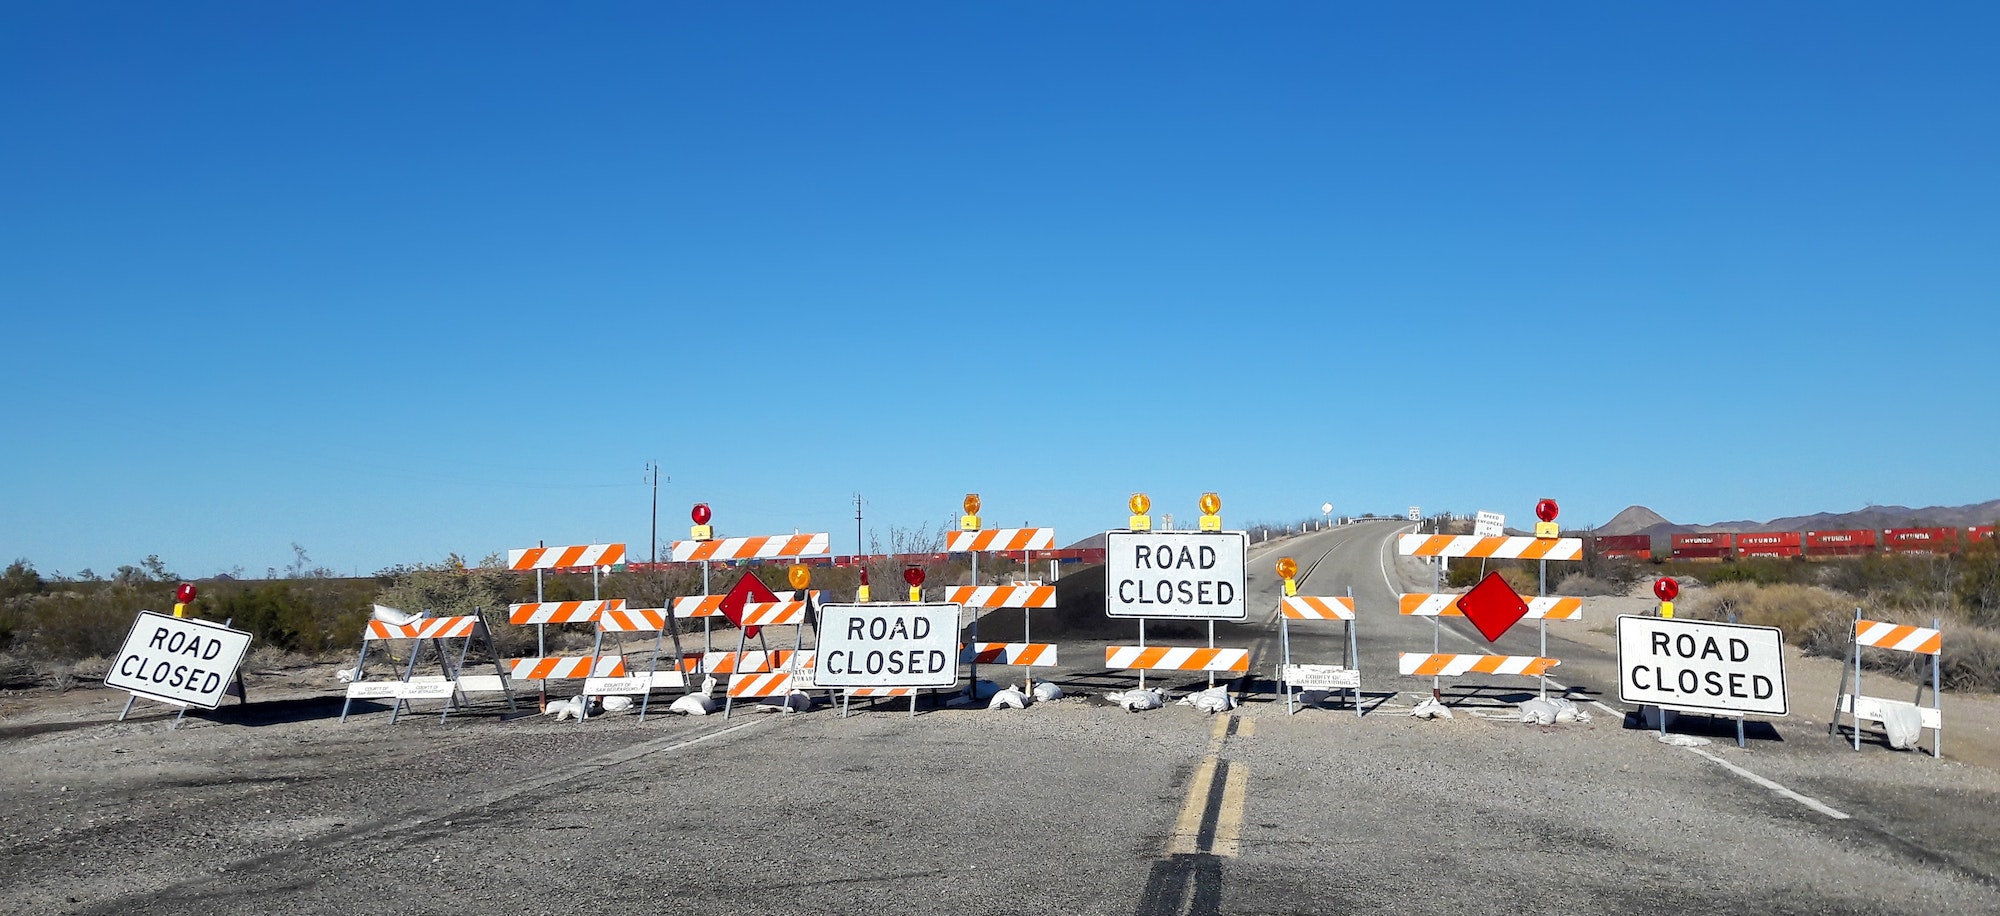 Route 66 - Road Closed